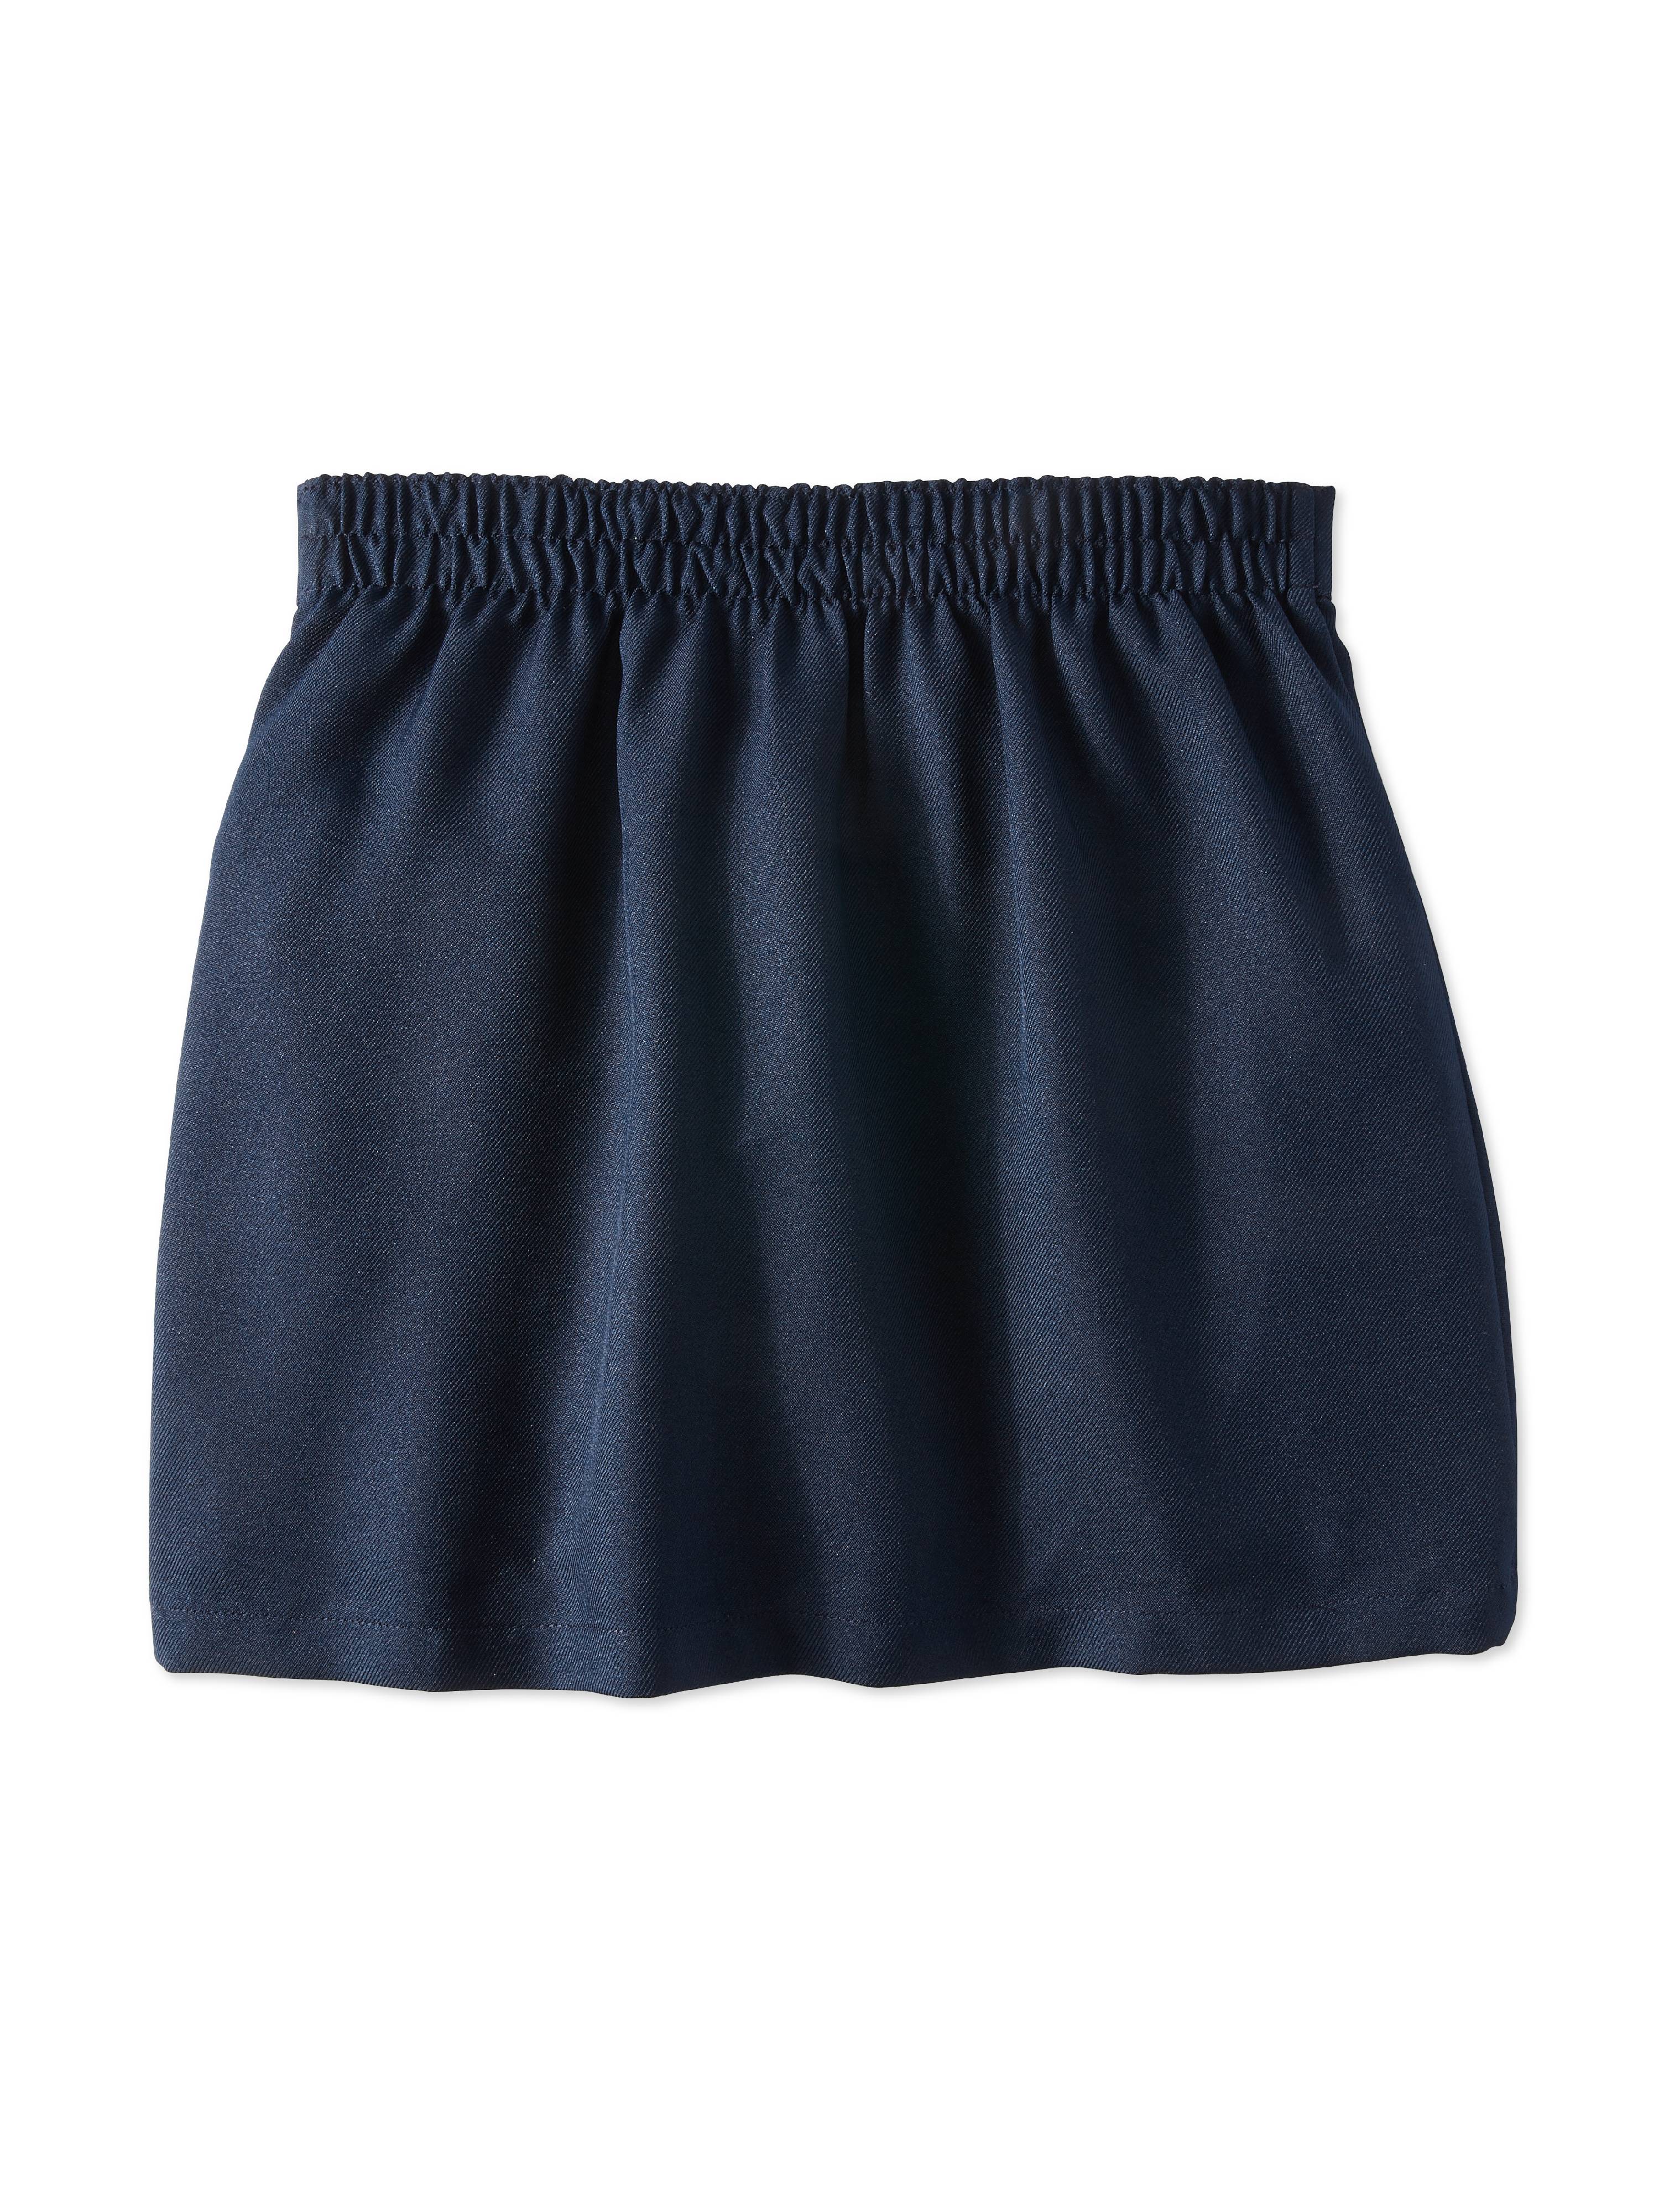 Wonder Nation Girls School Uniform Button Side Tab Scooter Skirt, Sizes 4-16 & Plus - image 3 of 4